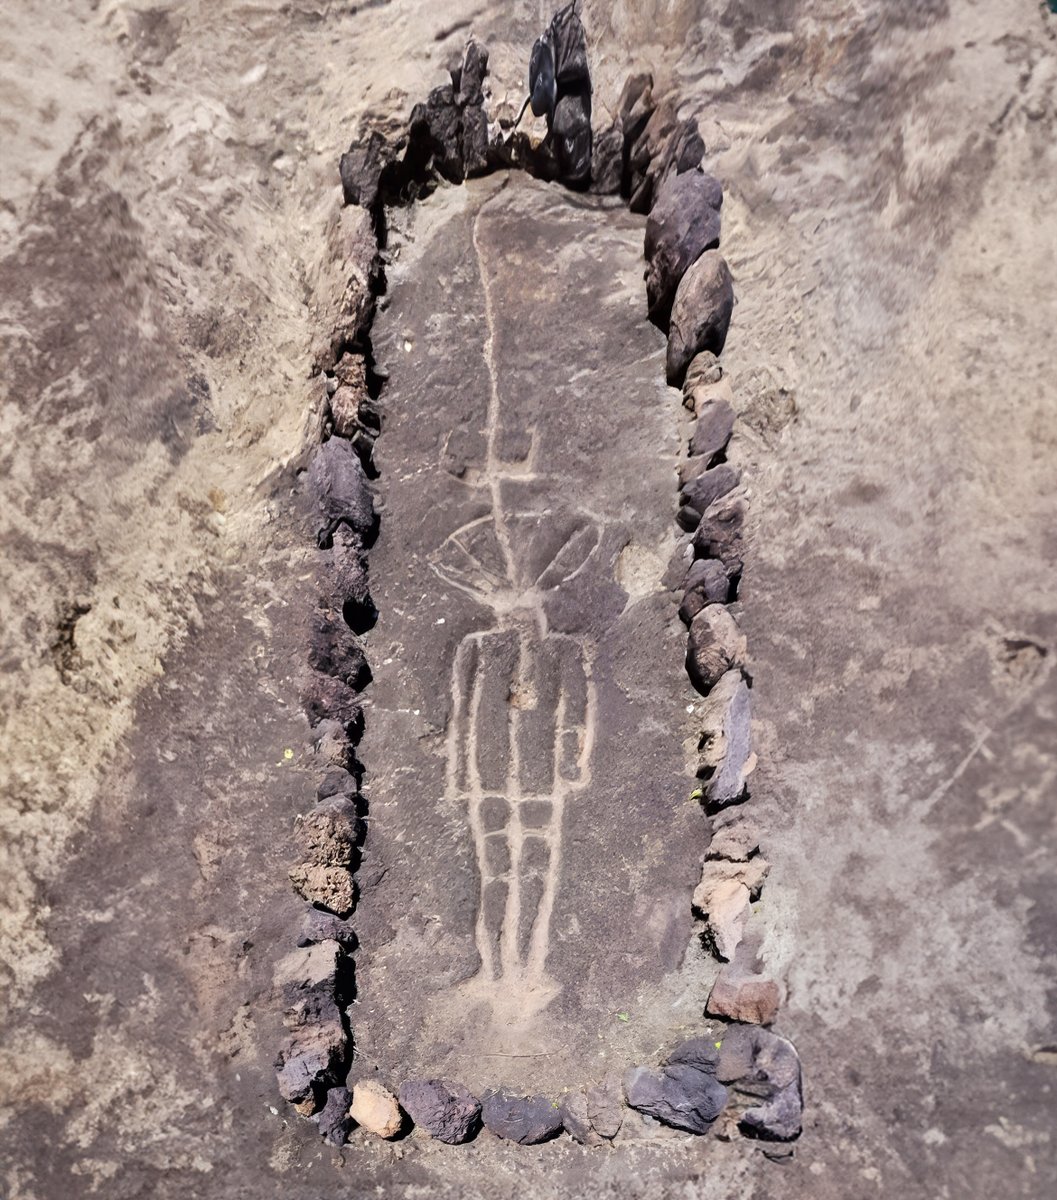 12,000 years ago: man questions his arrival.

Ratnagiri petroglyph shows figure emerging from lightning bolt, resembling ancient astronaut.

Petroglyph's survival depends on @MinOfCultureGoI & @ASIGoI.

#Archaeology